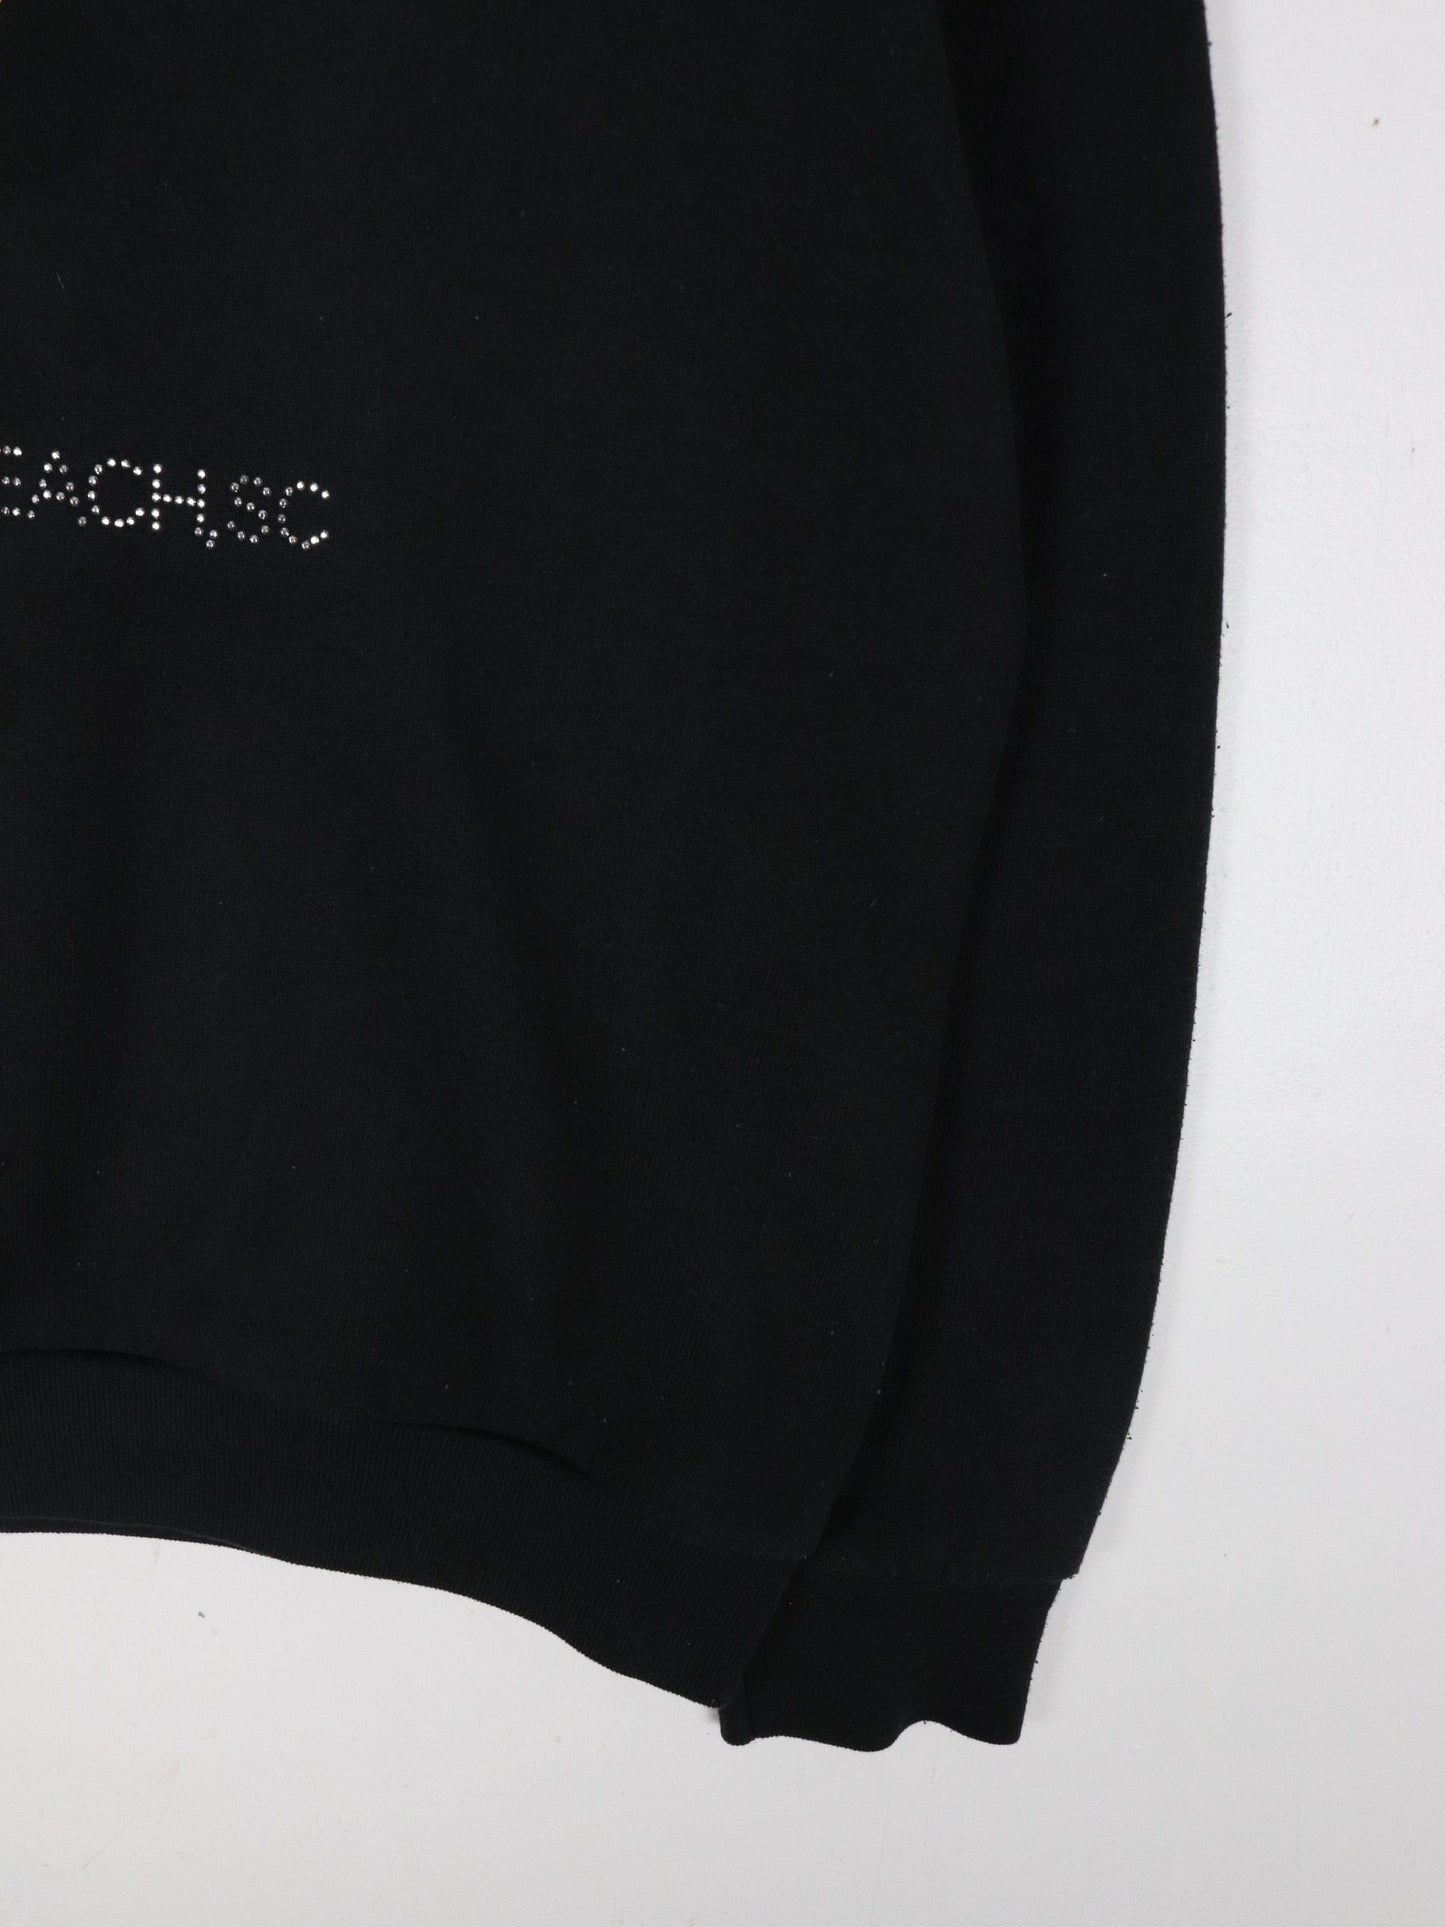 Other Sweatshirts & Hoodies Vintage Myrtle Beach T Shirt Fits Mens Small Black Rhinestones Beach USA